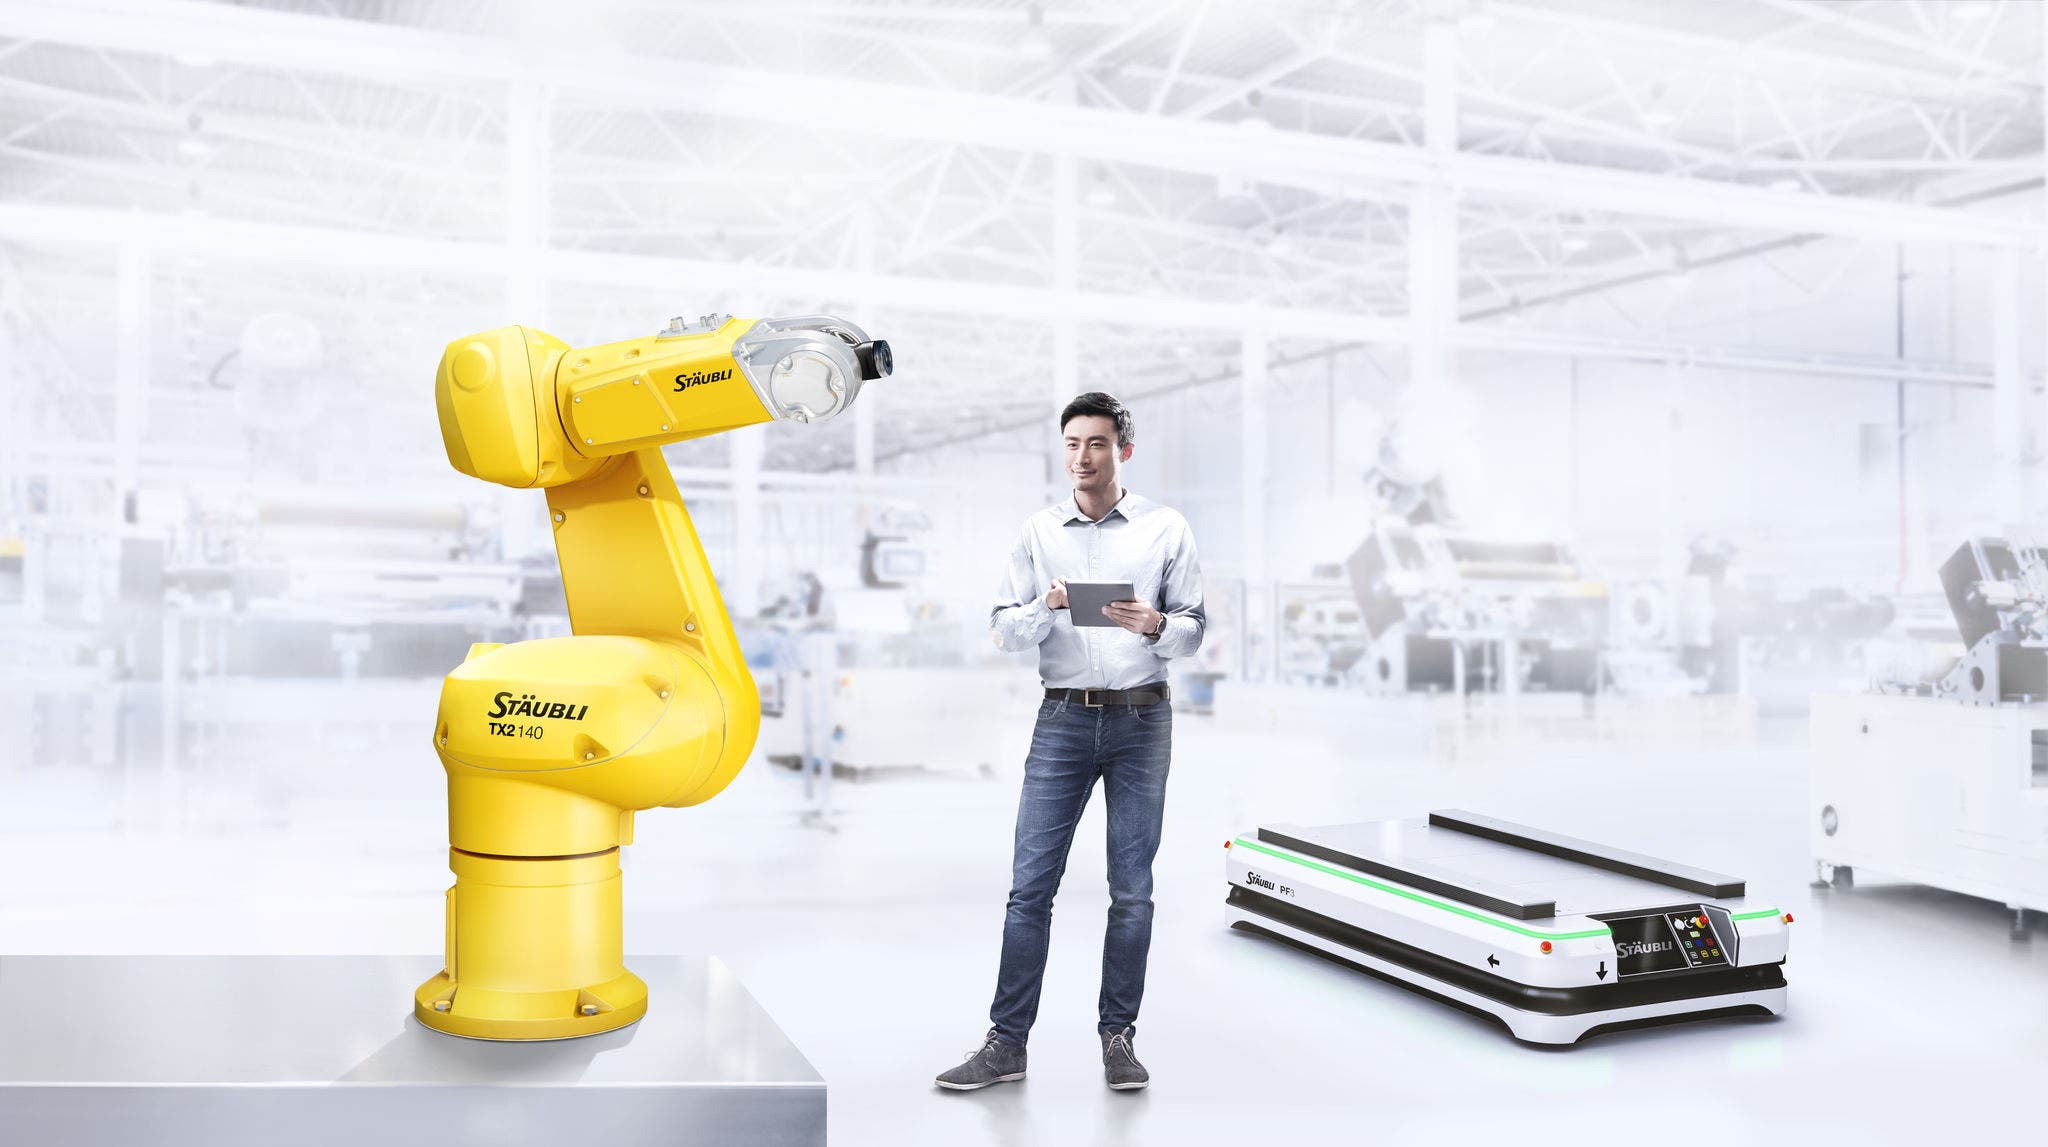 Industrial robotic solutions